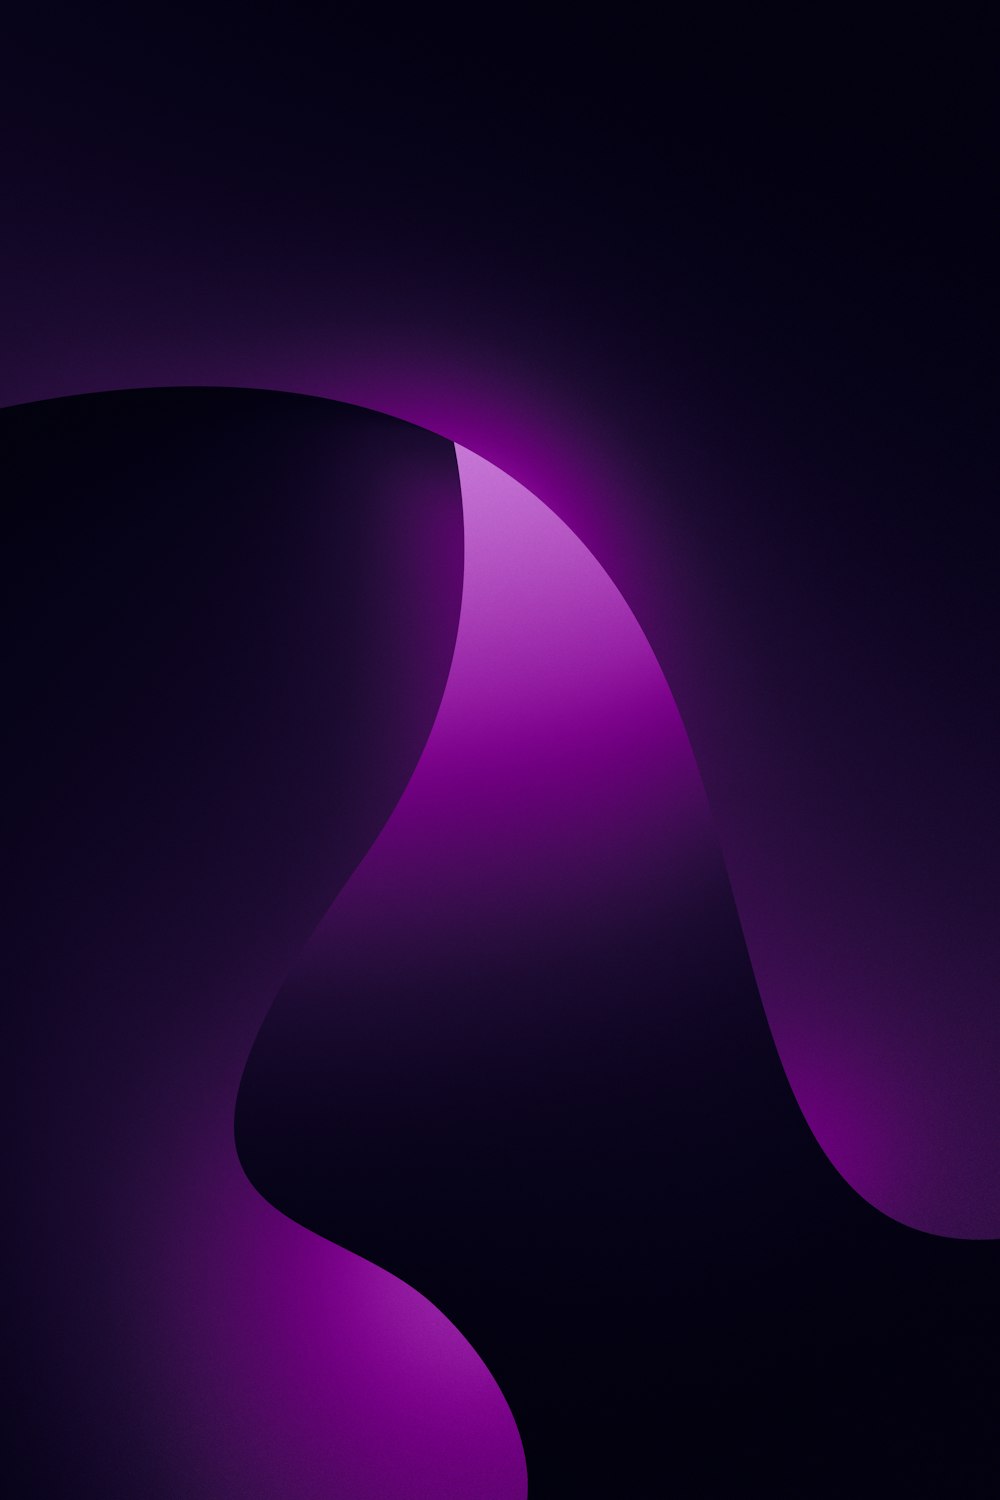 un fondo púrpura oscuro con una curva curva